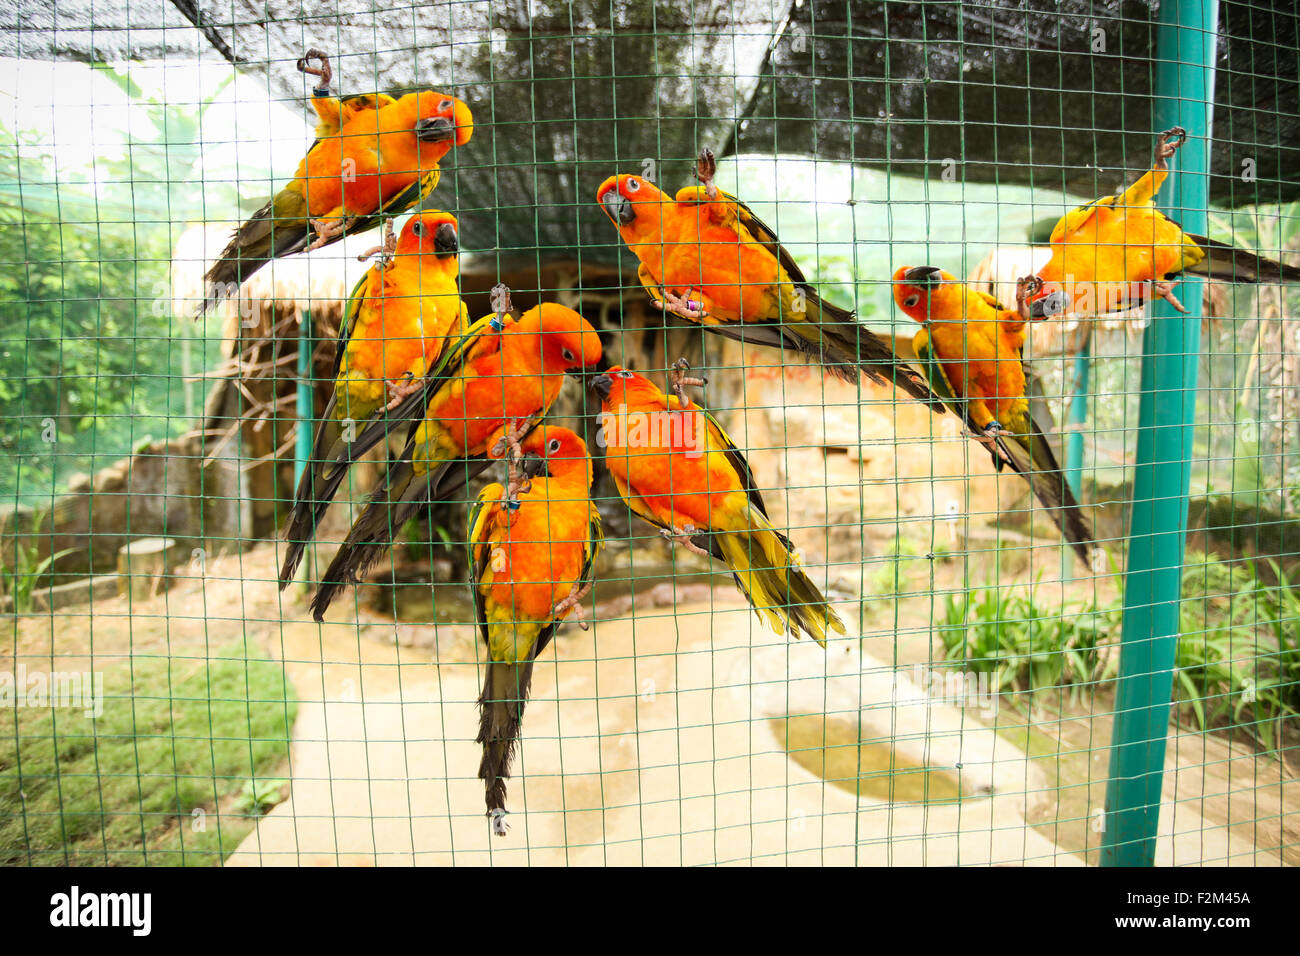 Sun conure parrots in aviary Stock Photo